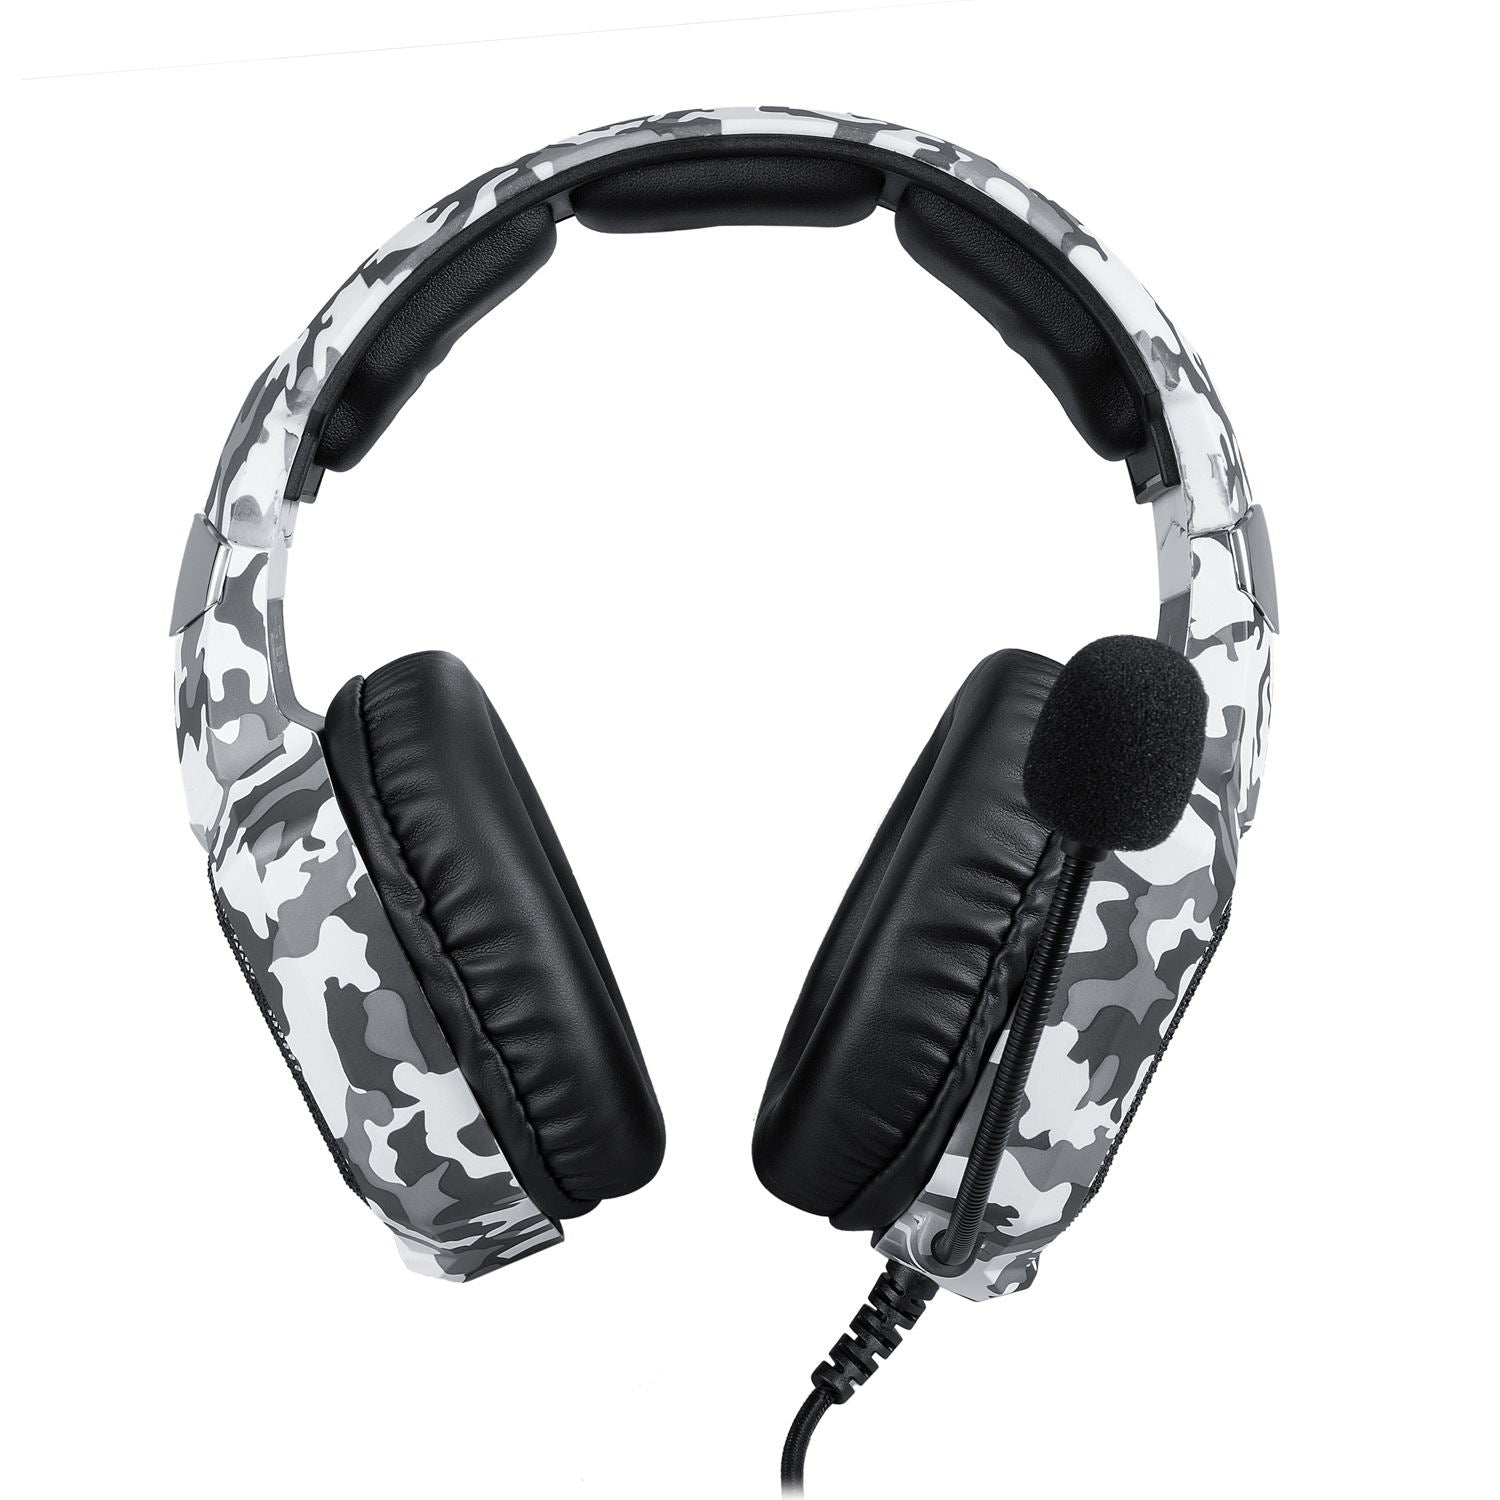 K8 camouflage headphones